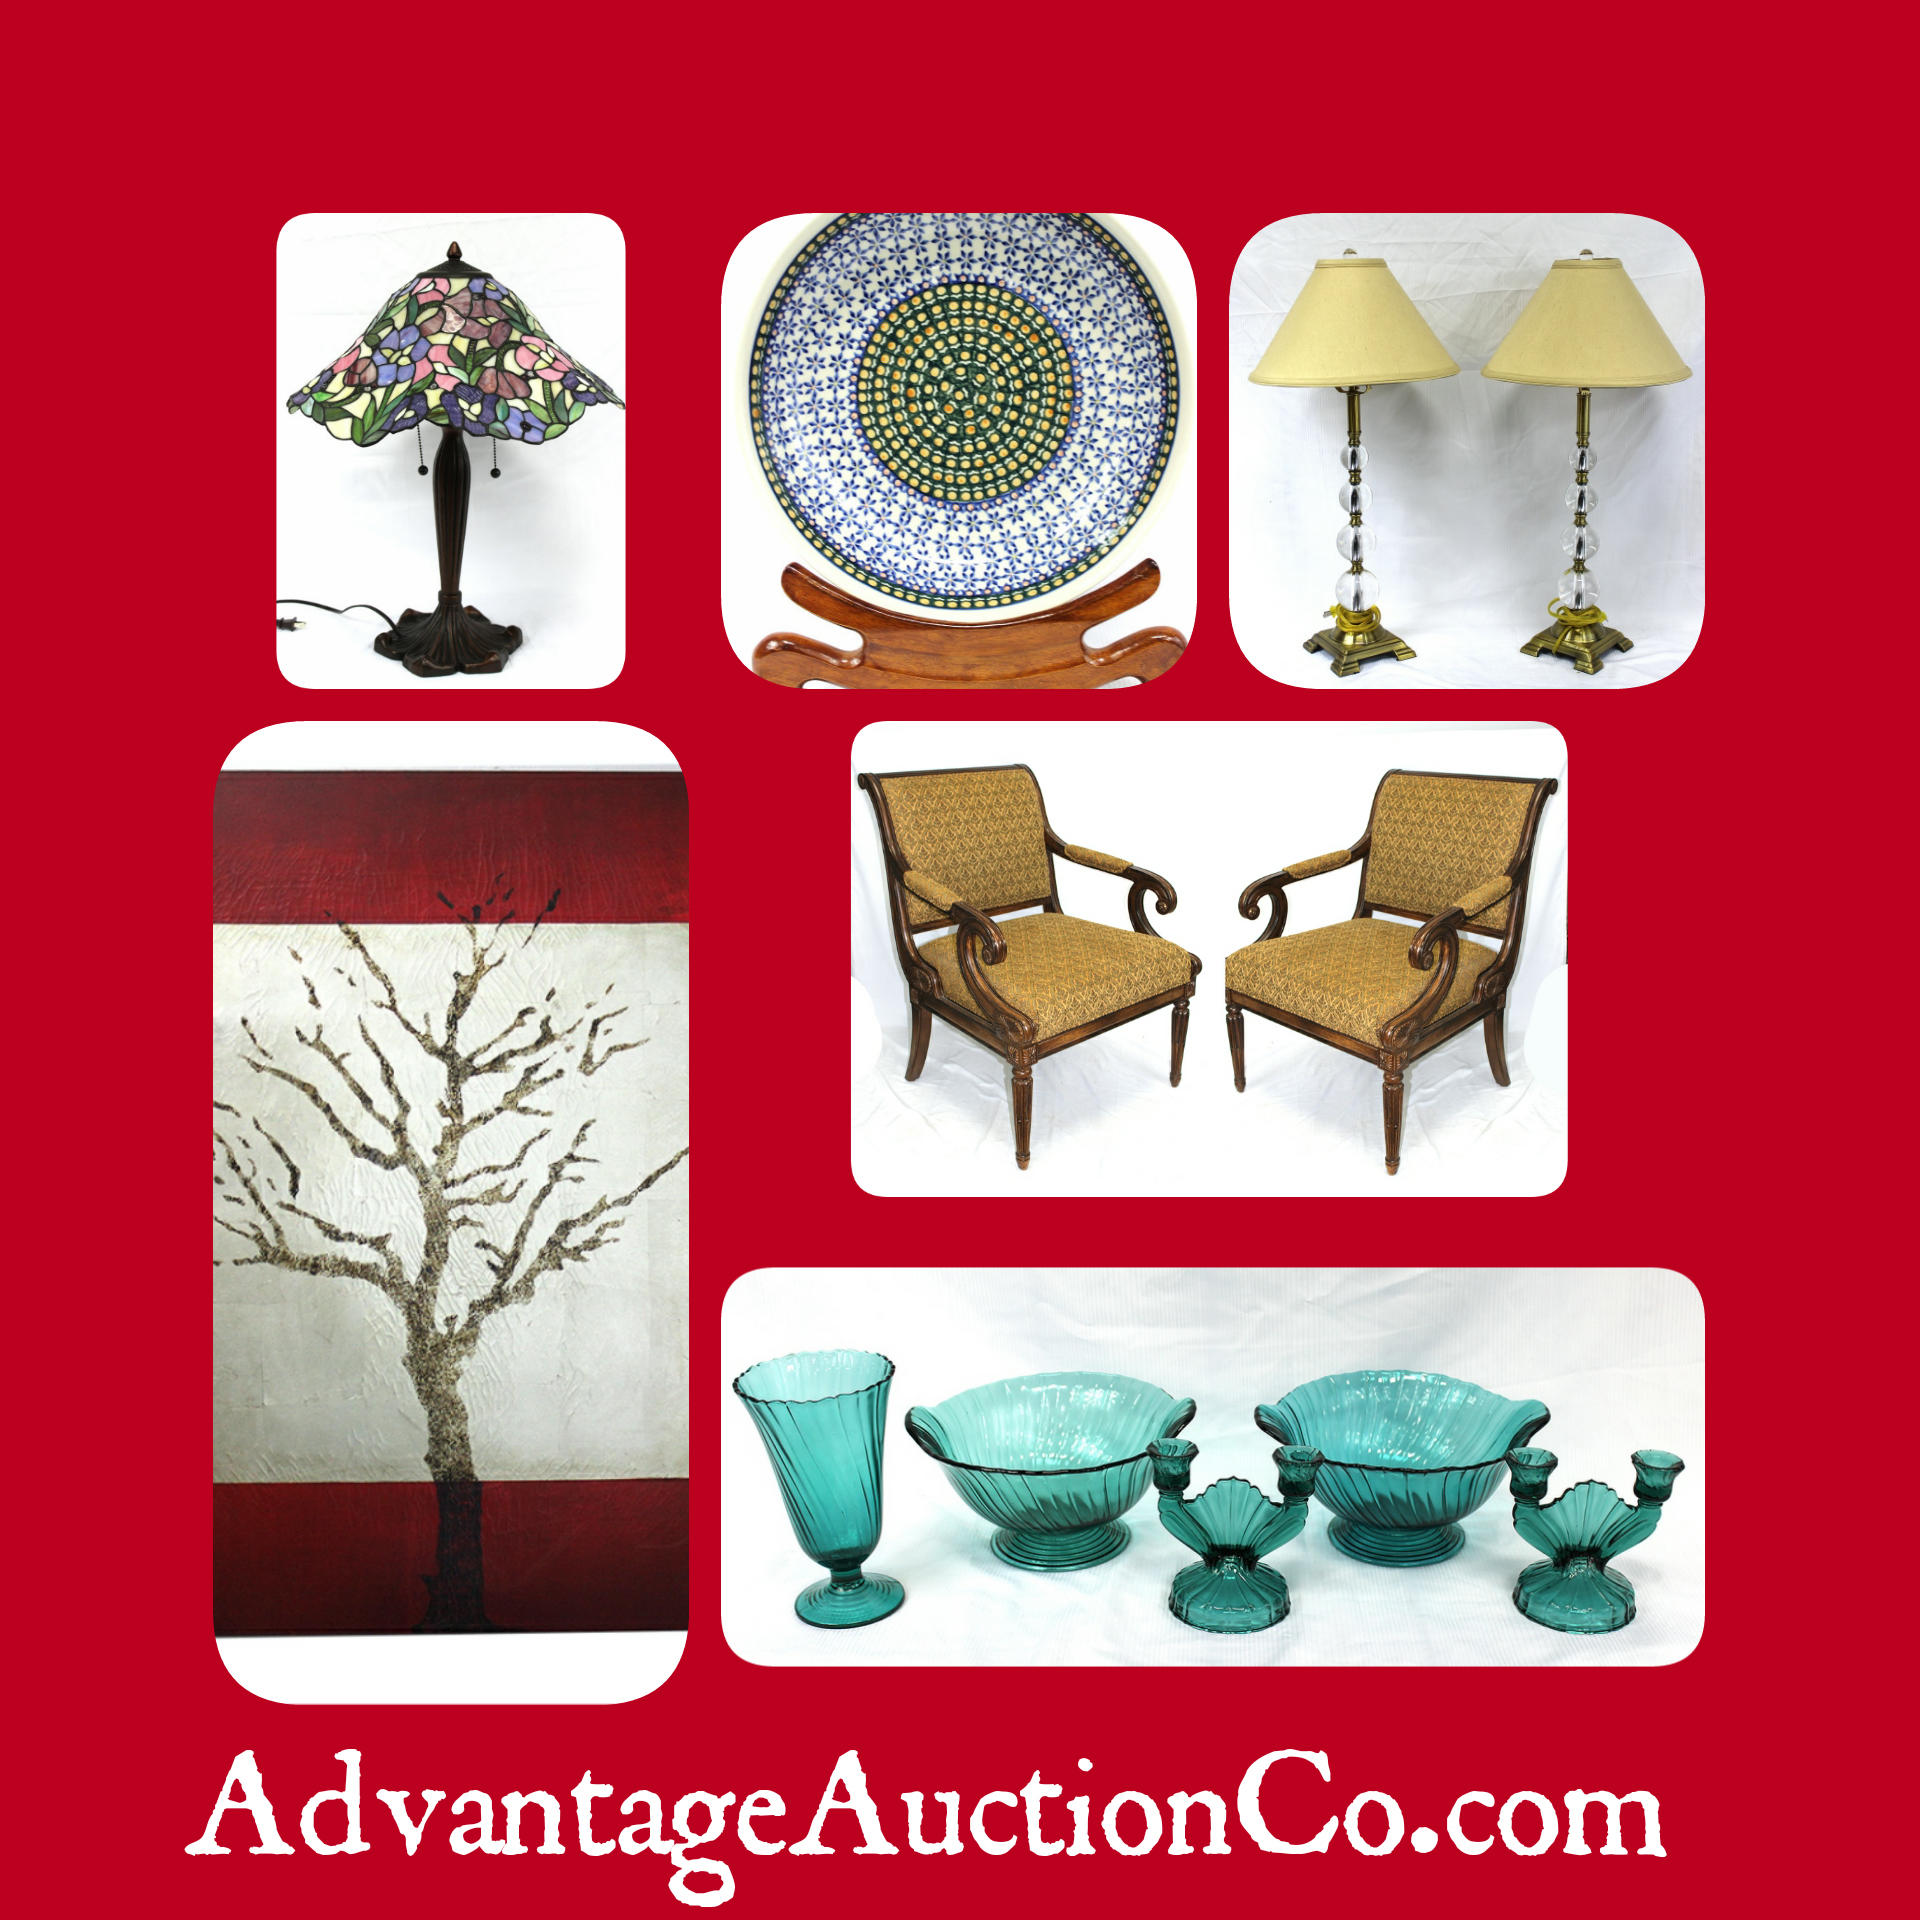 Advantage Auction Company Photo